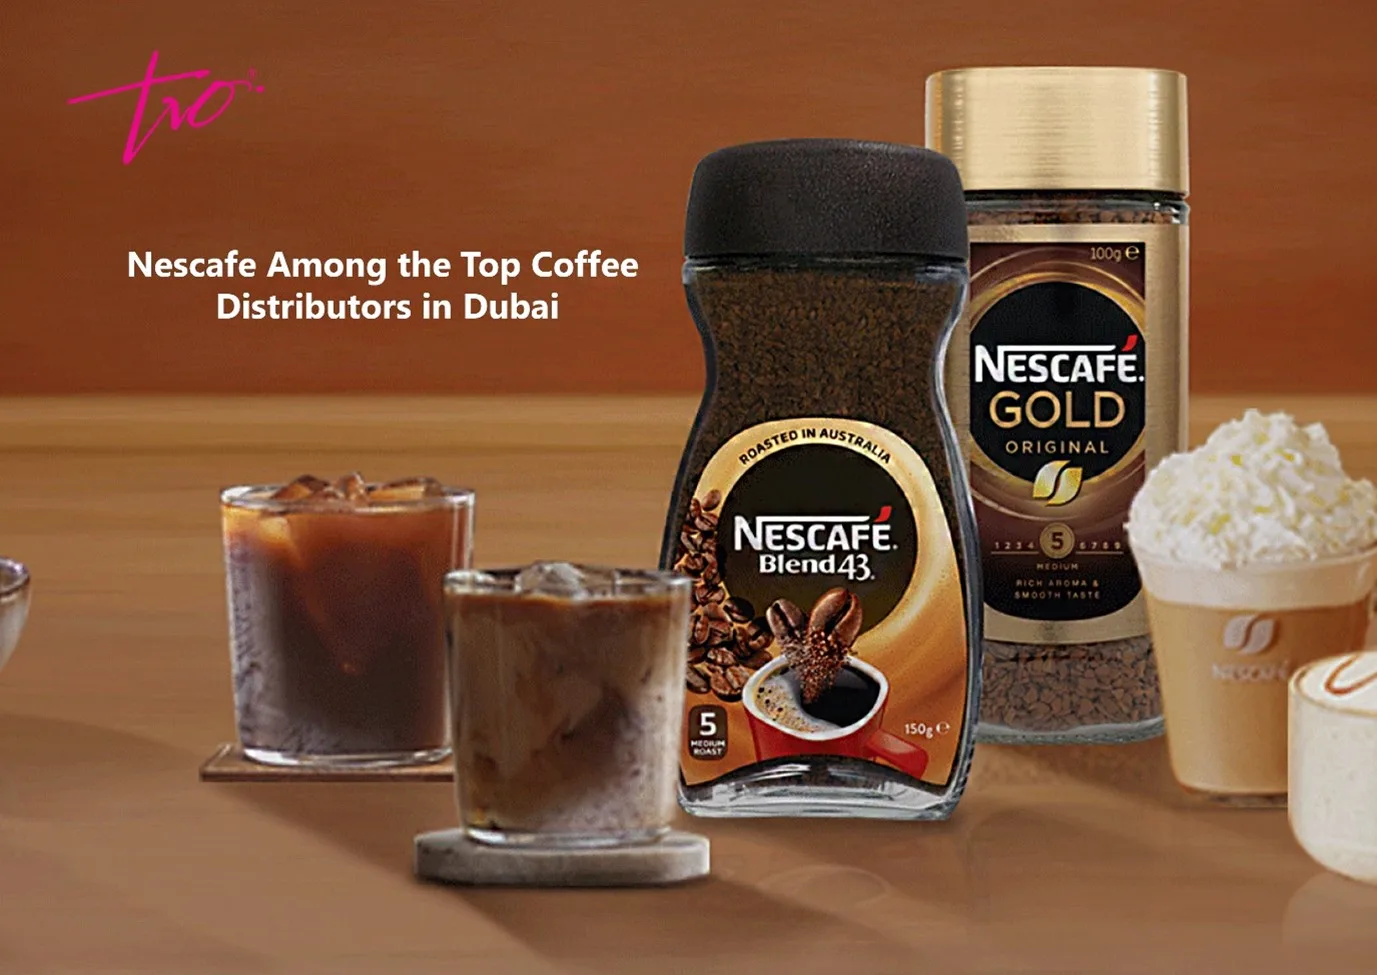 Nescafe Among the Top Coffee Distributors in Dubai